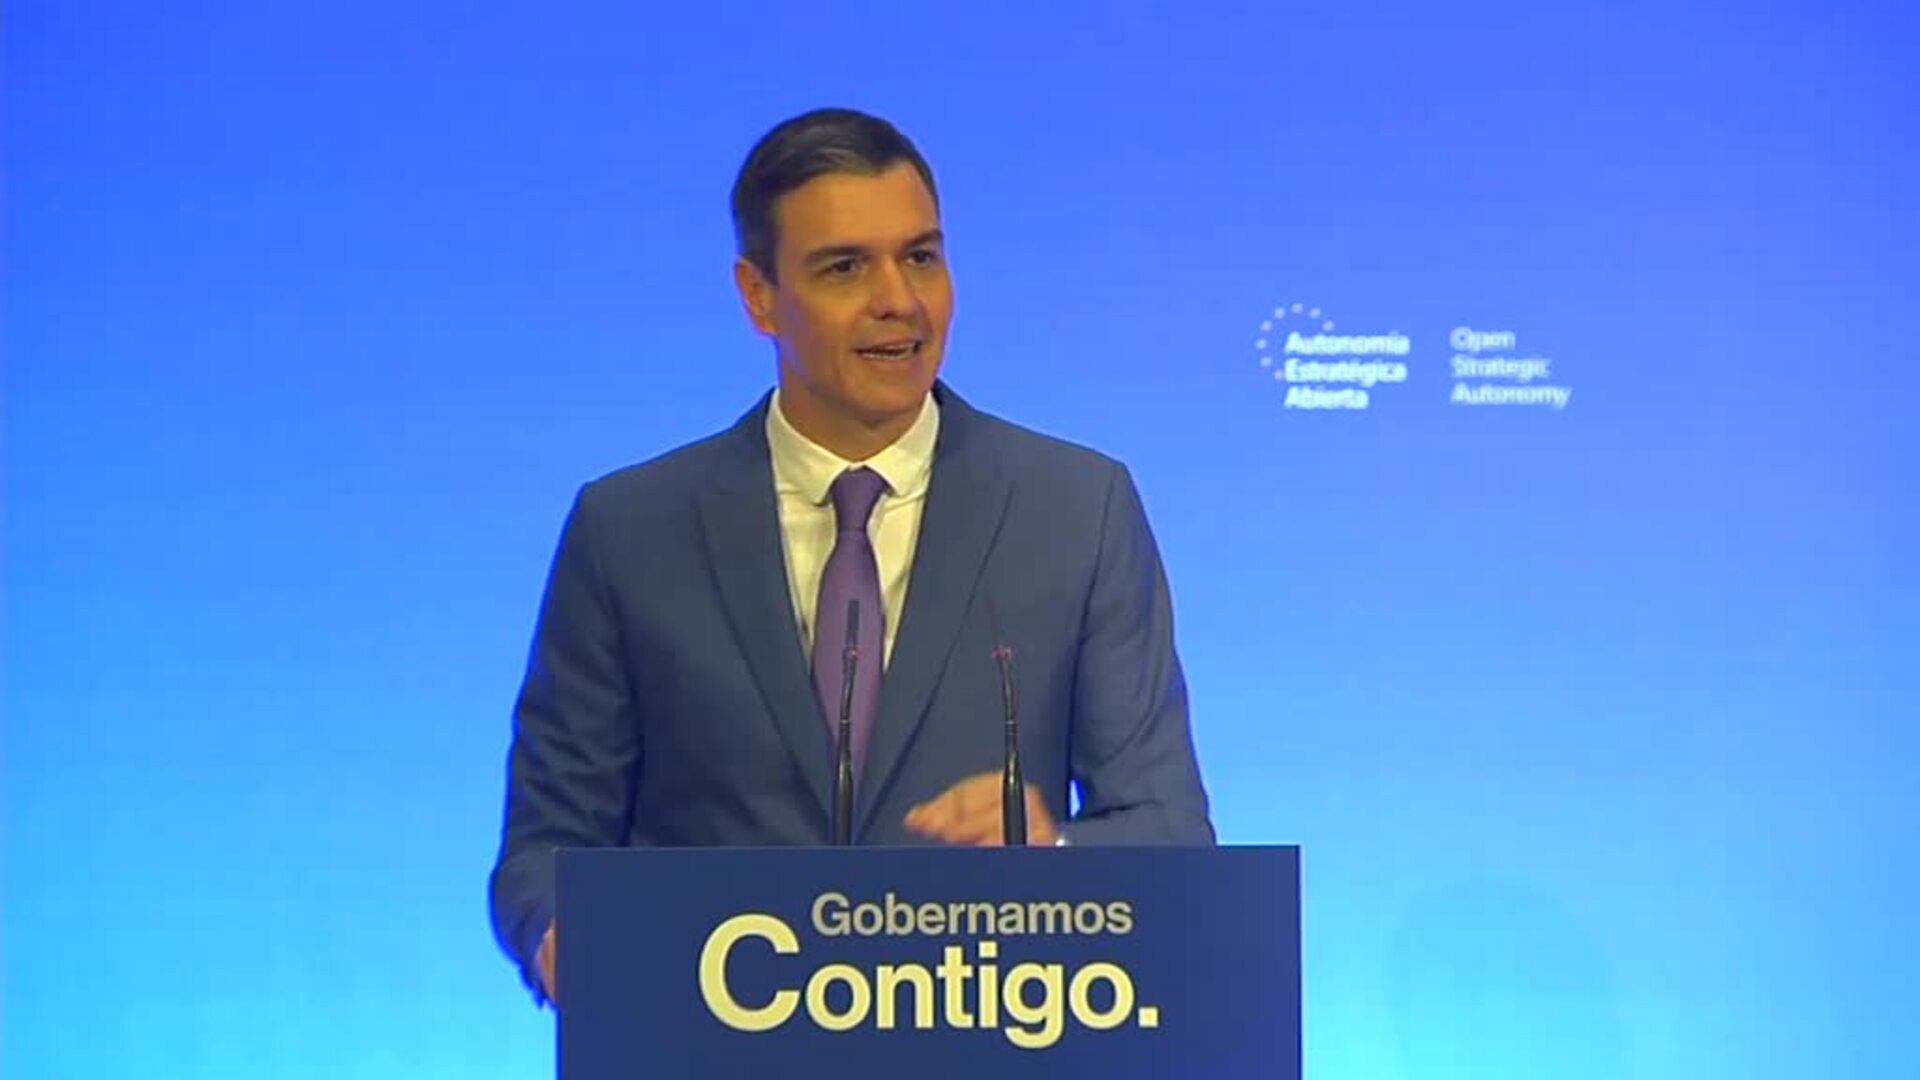 Pedro Sánchez: "Vamos a reindustrializar Europa"